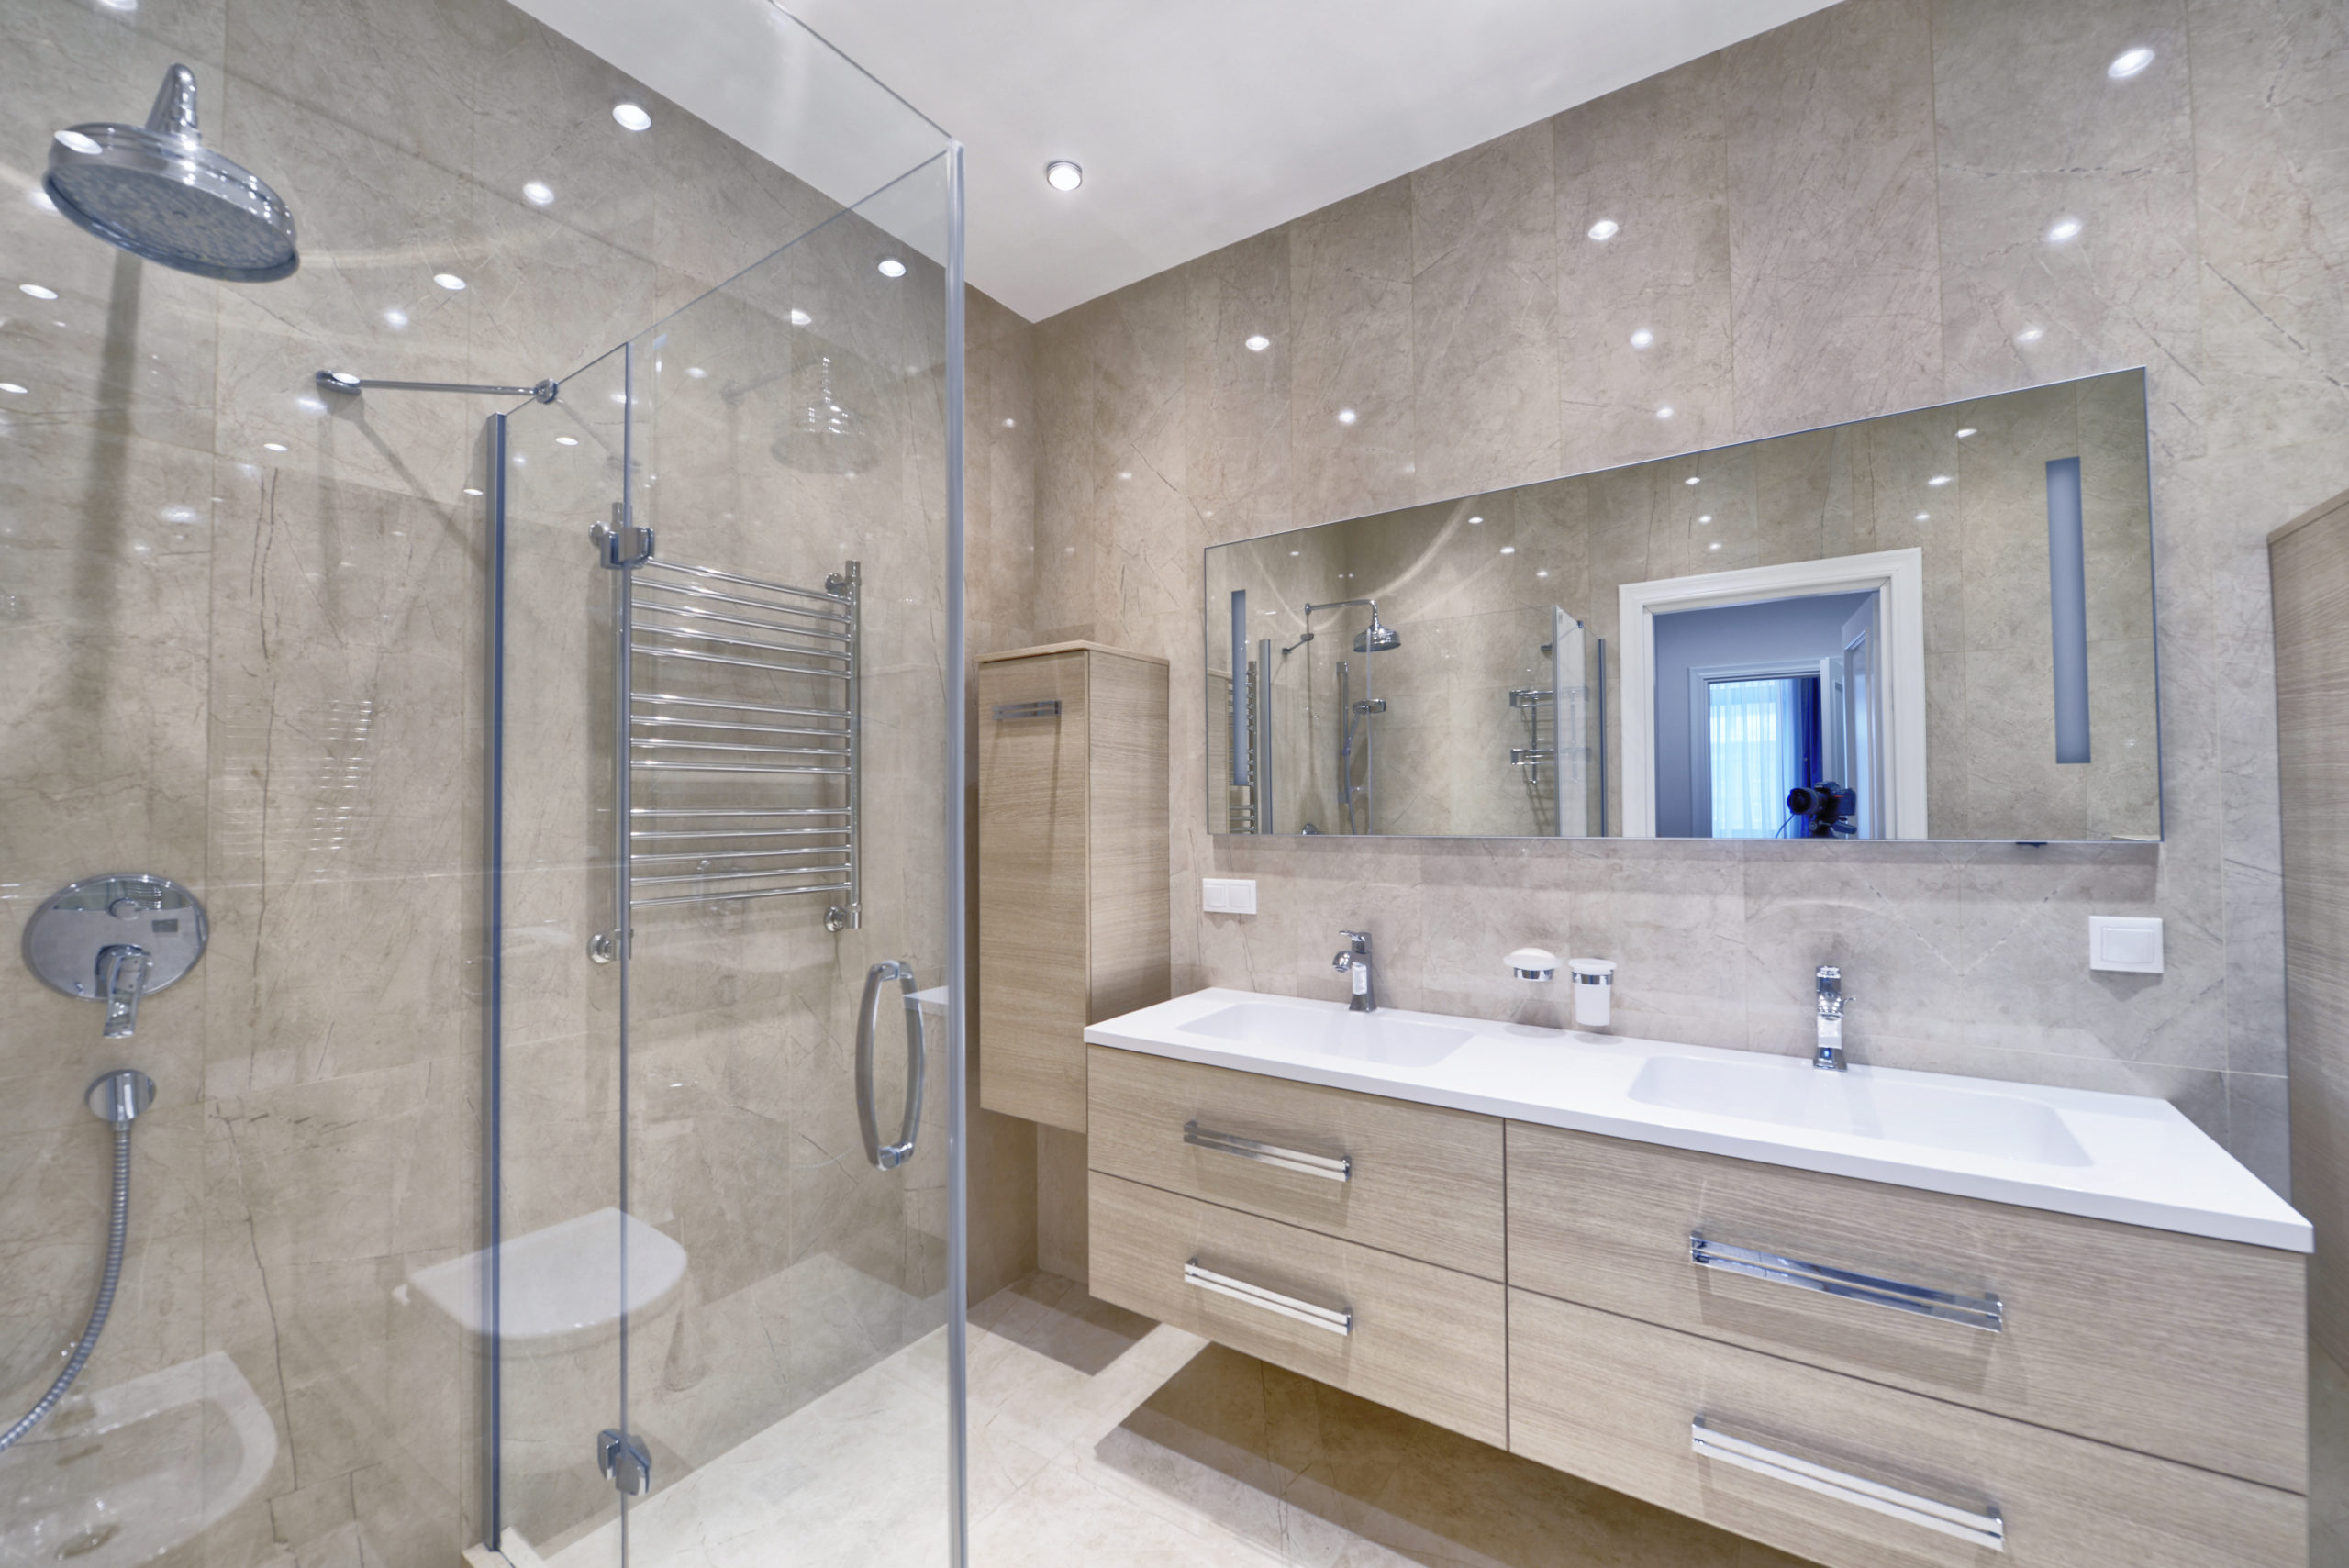 Bathroom Renovation, his & hers double sink vanity, ceremic tiles and heated floor